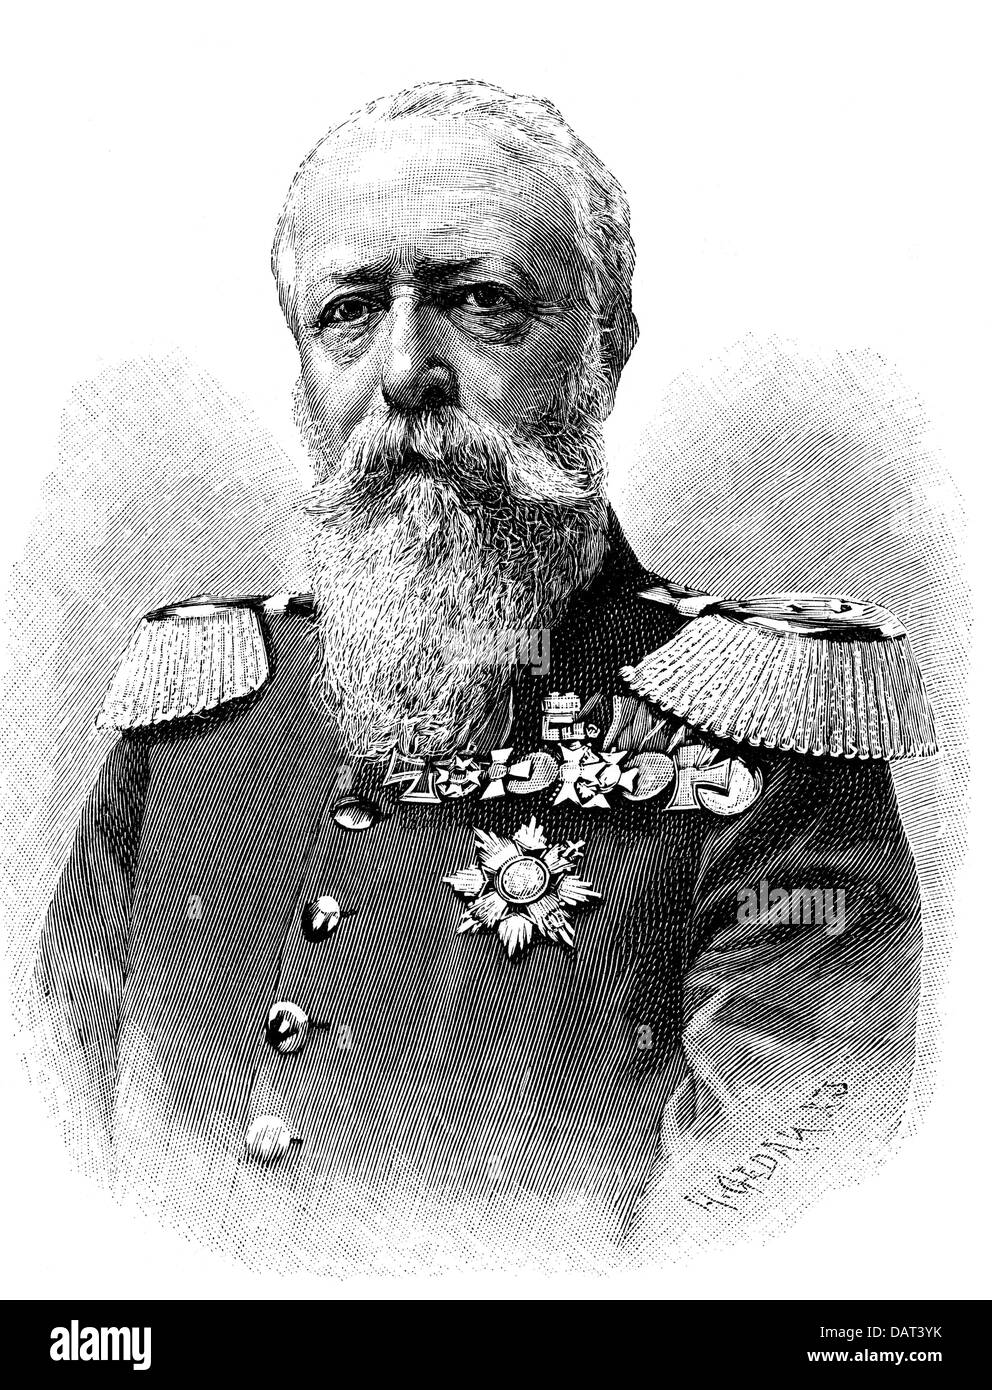 Frederick I, 9.9.1826 - 28.9.1907, Grand Duke of Baden 5.9.1856 - 28.9.1907, portrait, wood engraving, circa 1895, Stock Photo